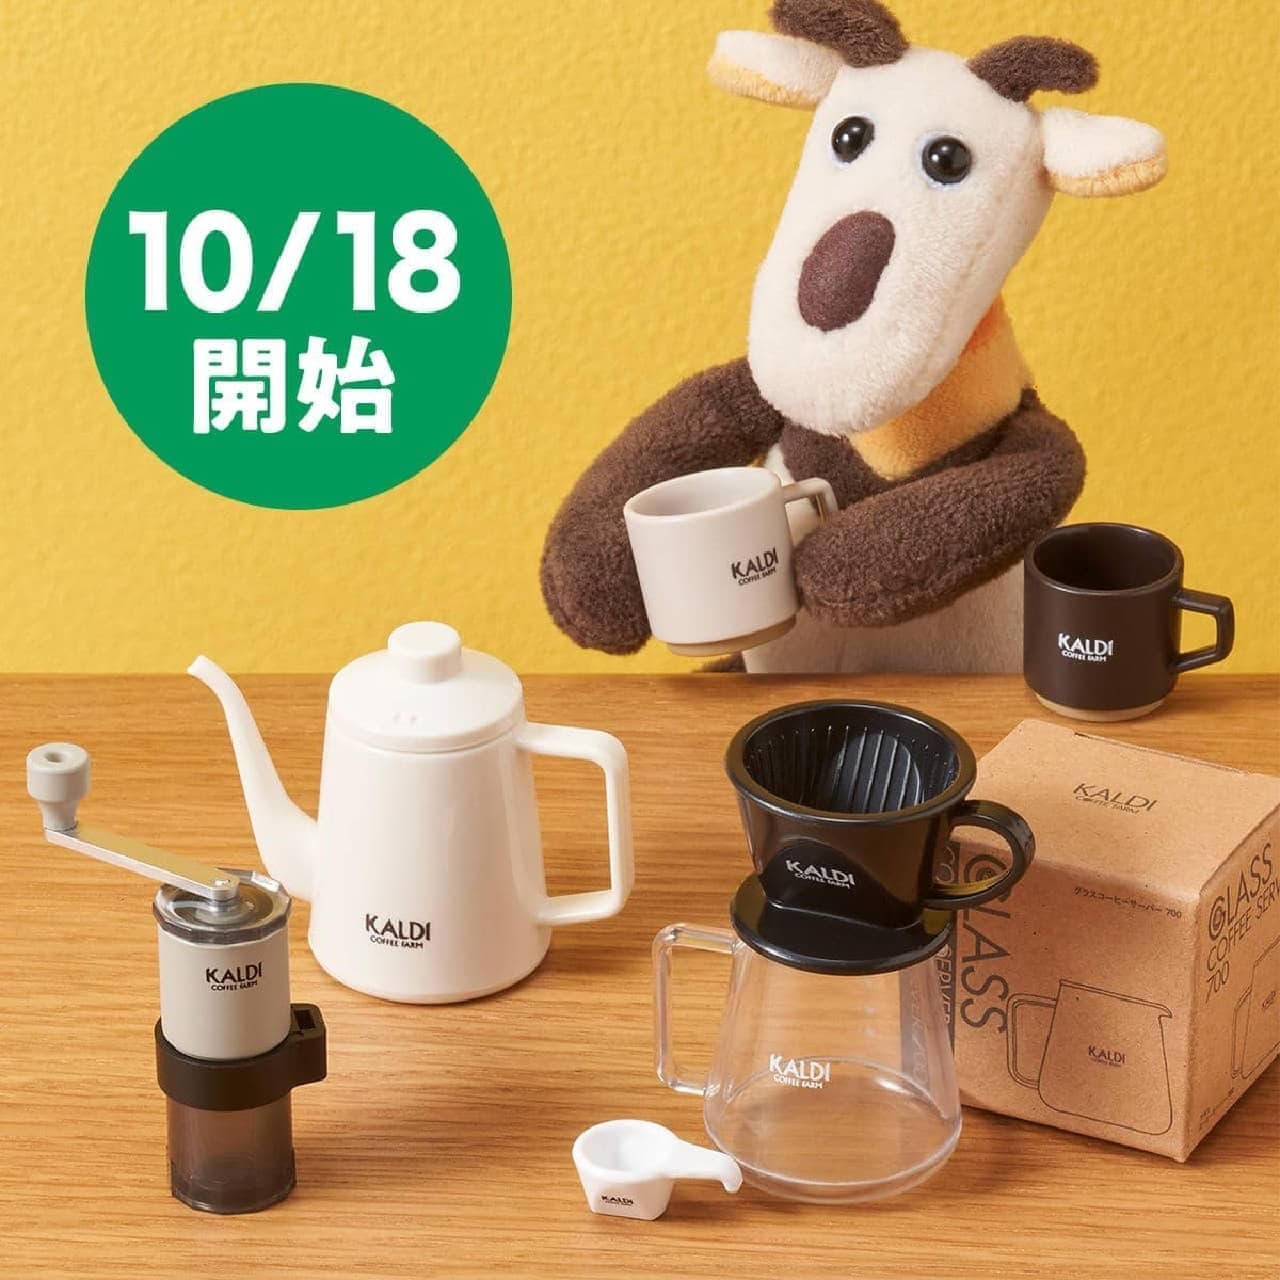 KALDI "Coffee Goods Miniature Figure" Present